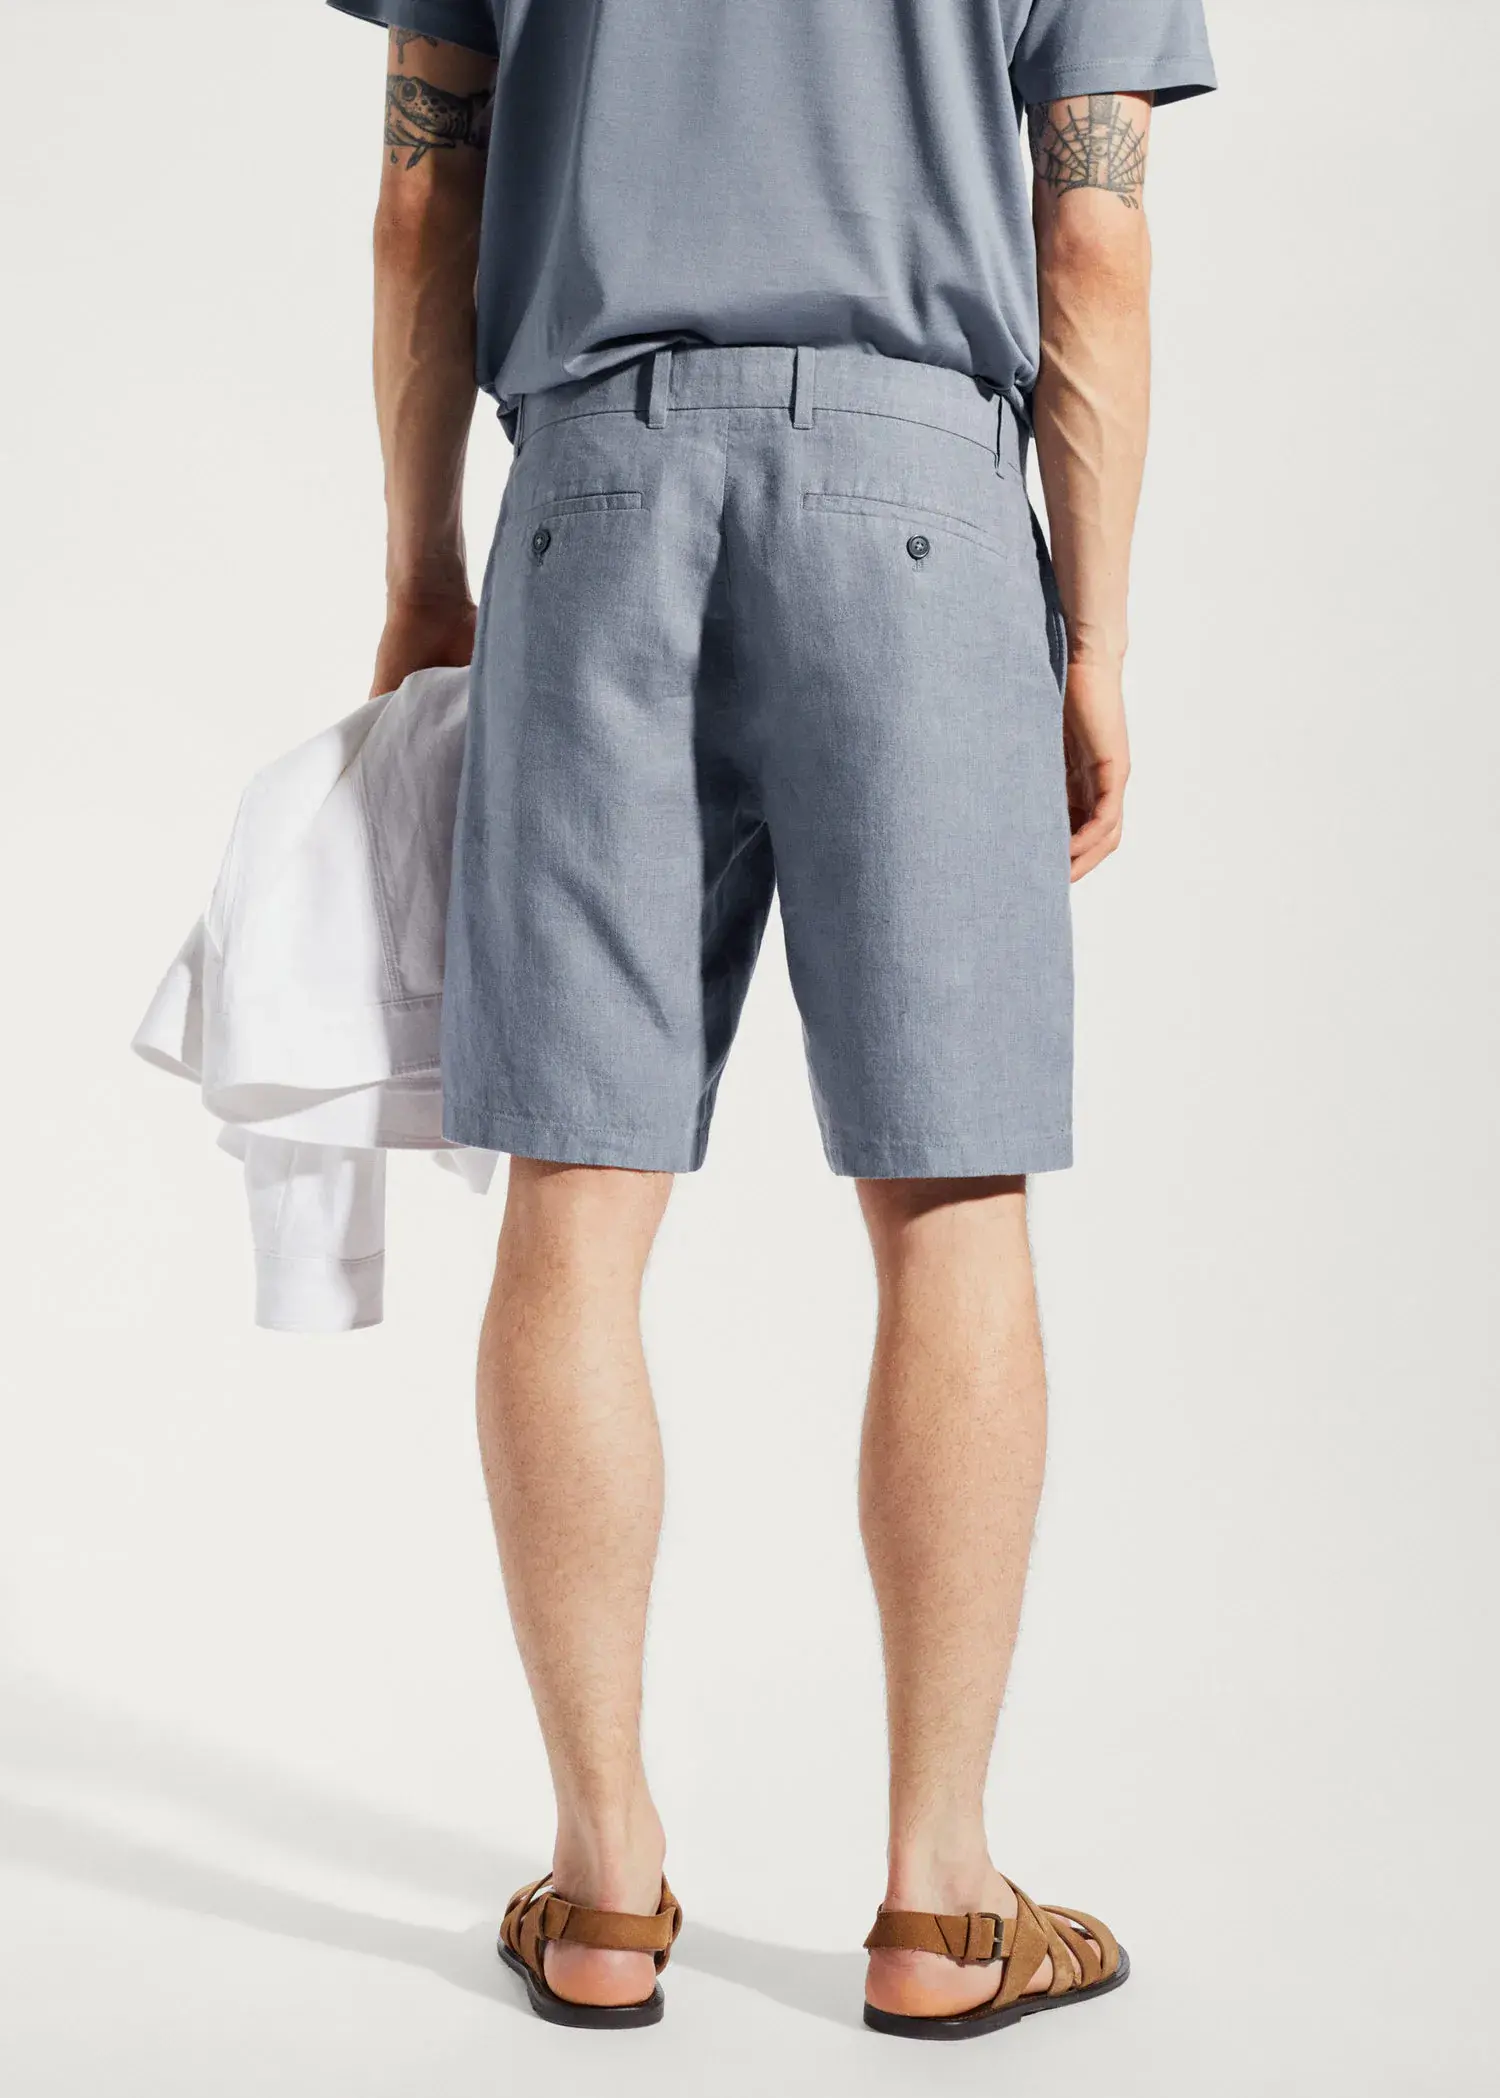 Mango 100% linen shorts. a person wearing a pair of shorts and a shirt. 